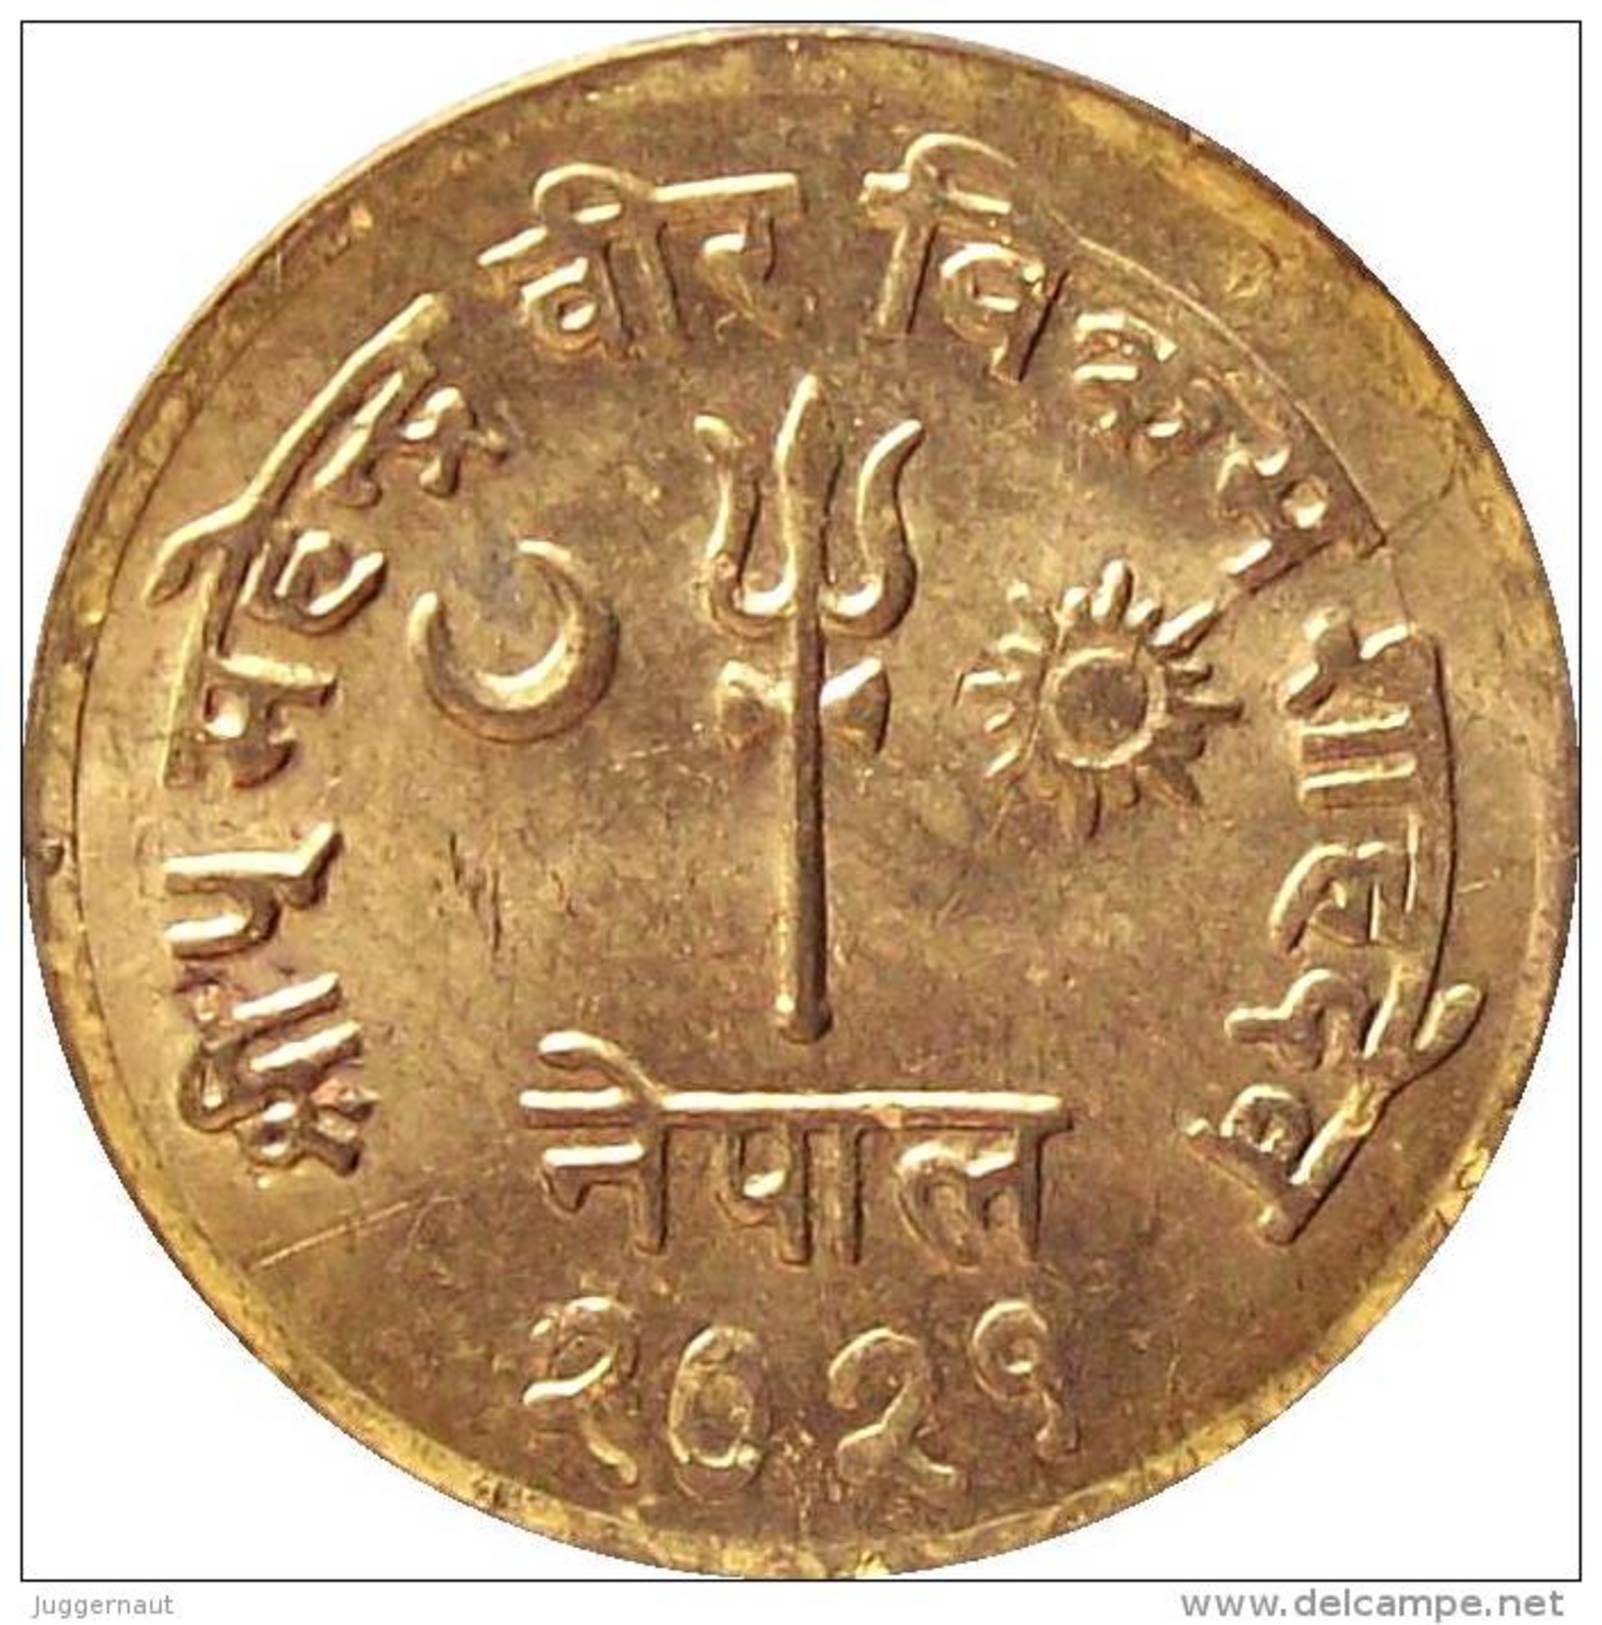 NEPAL 10 PAISA ALUMINUM-BRONZE COIN 1964 AD KM-763 UNCIRCULATED UNC - Nepal